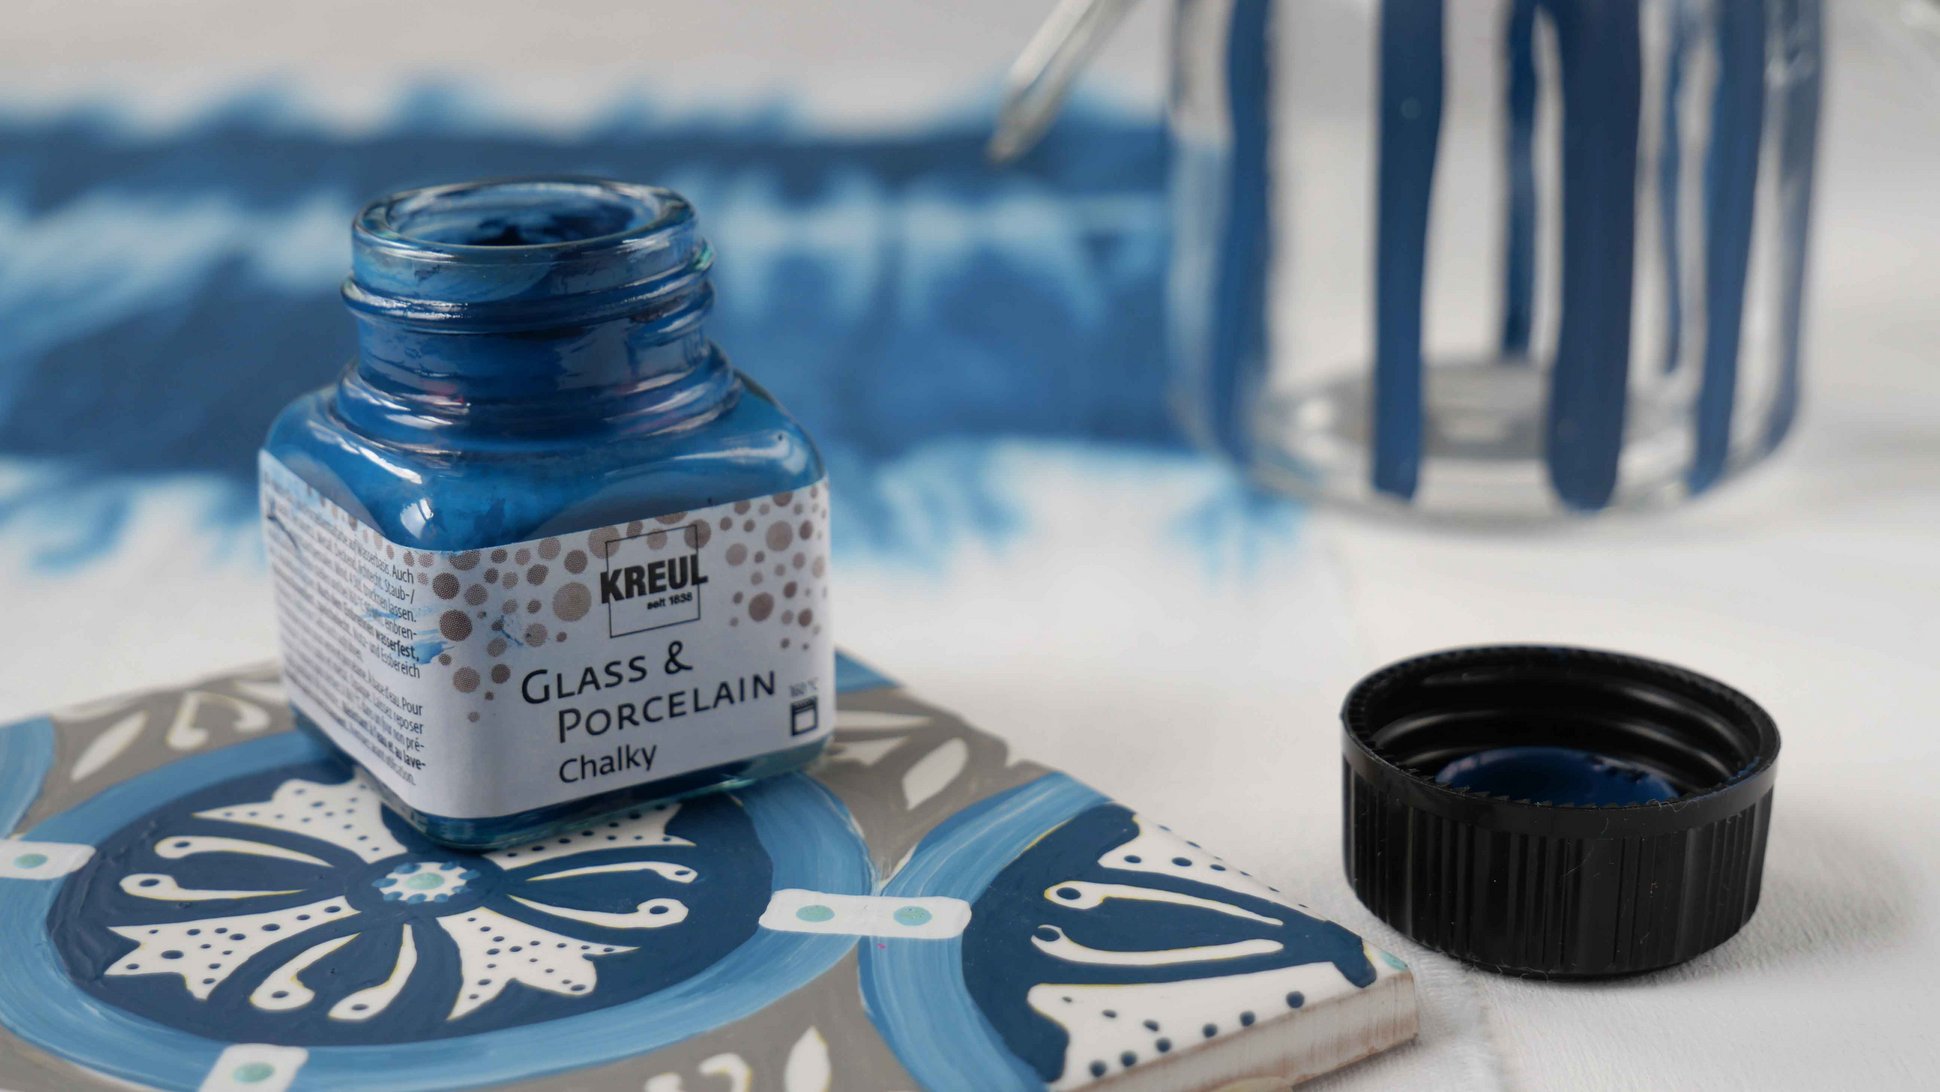 KREUL Glass Porcelain chalky kreidig Blau Keramik Fliesen DIY bemalen